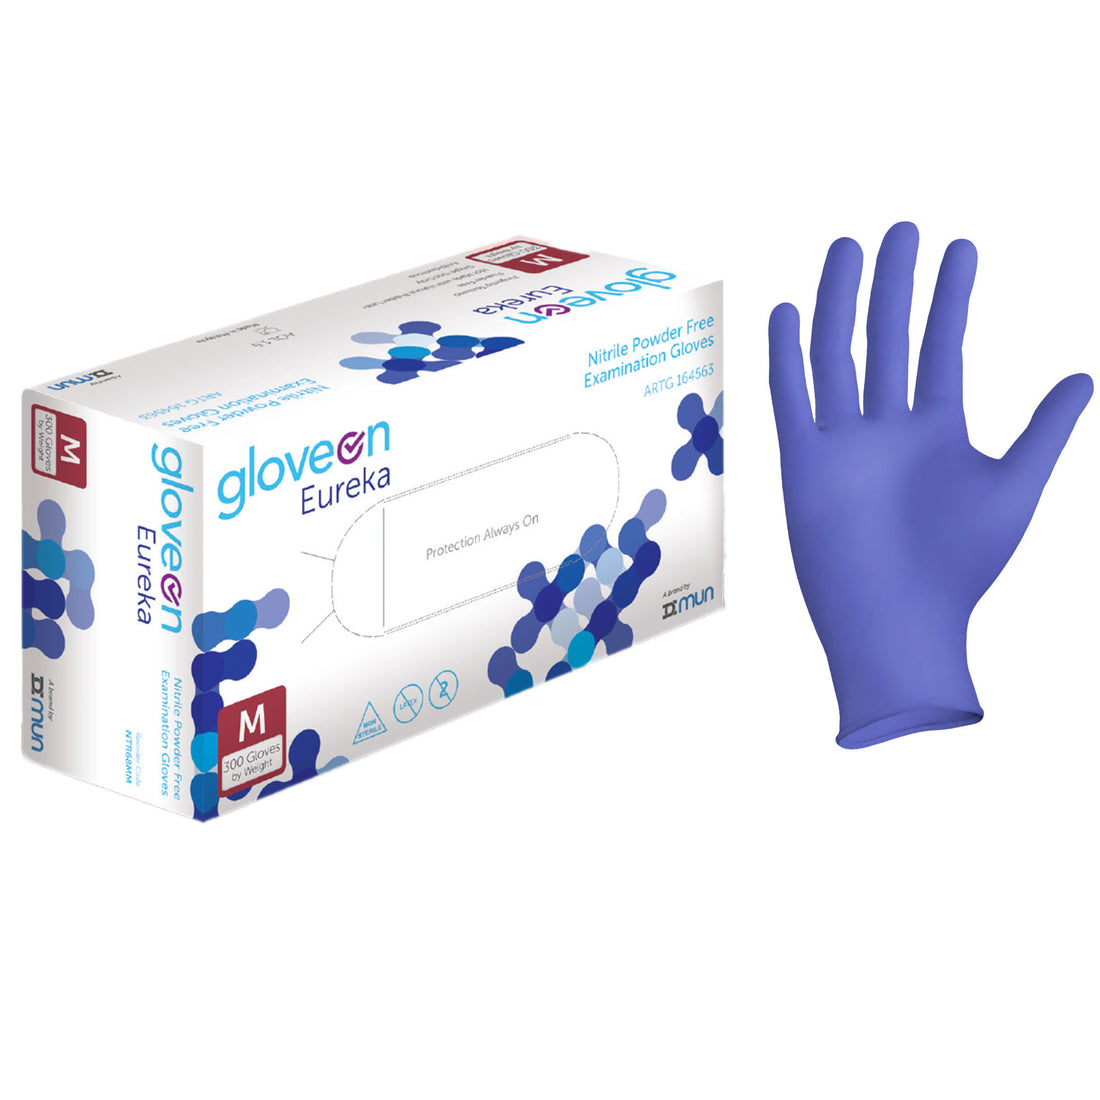 Dental Gloves for the Modern Day Practice